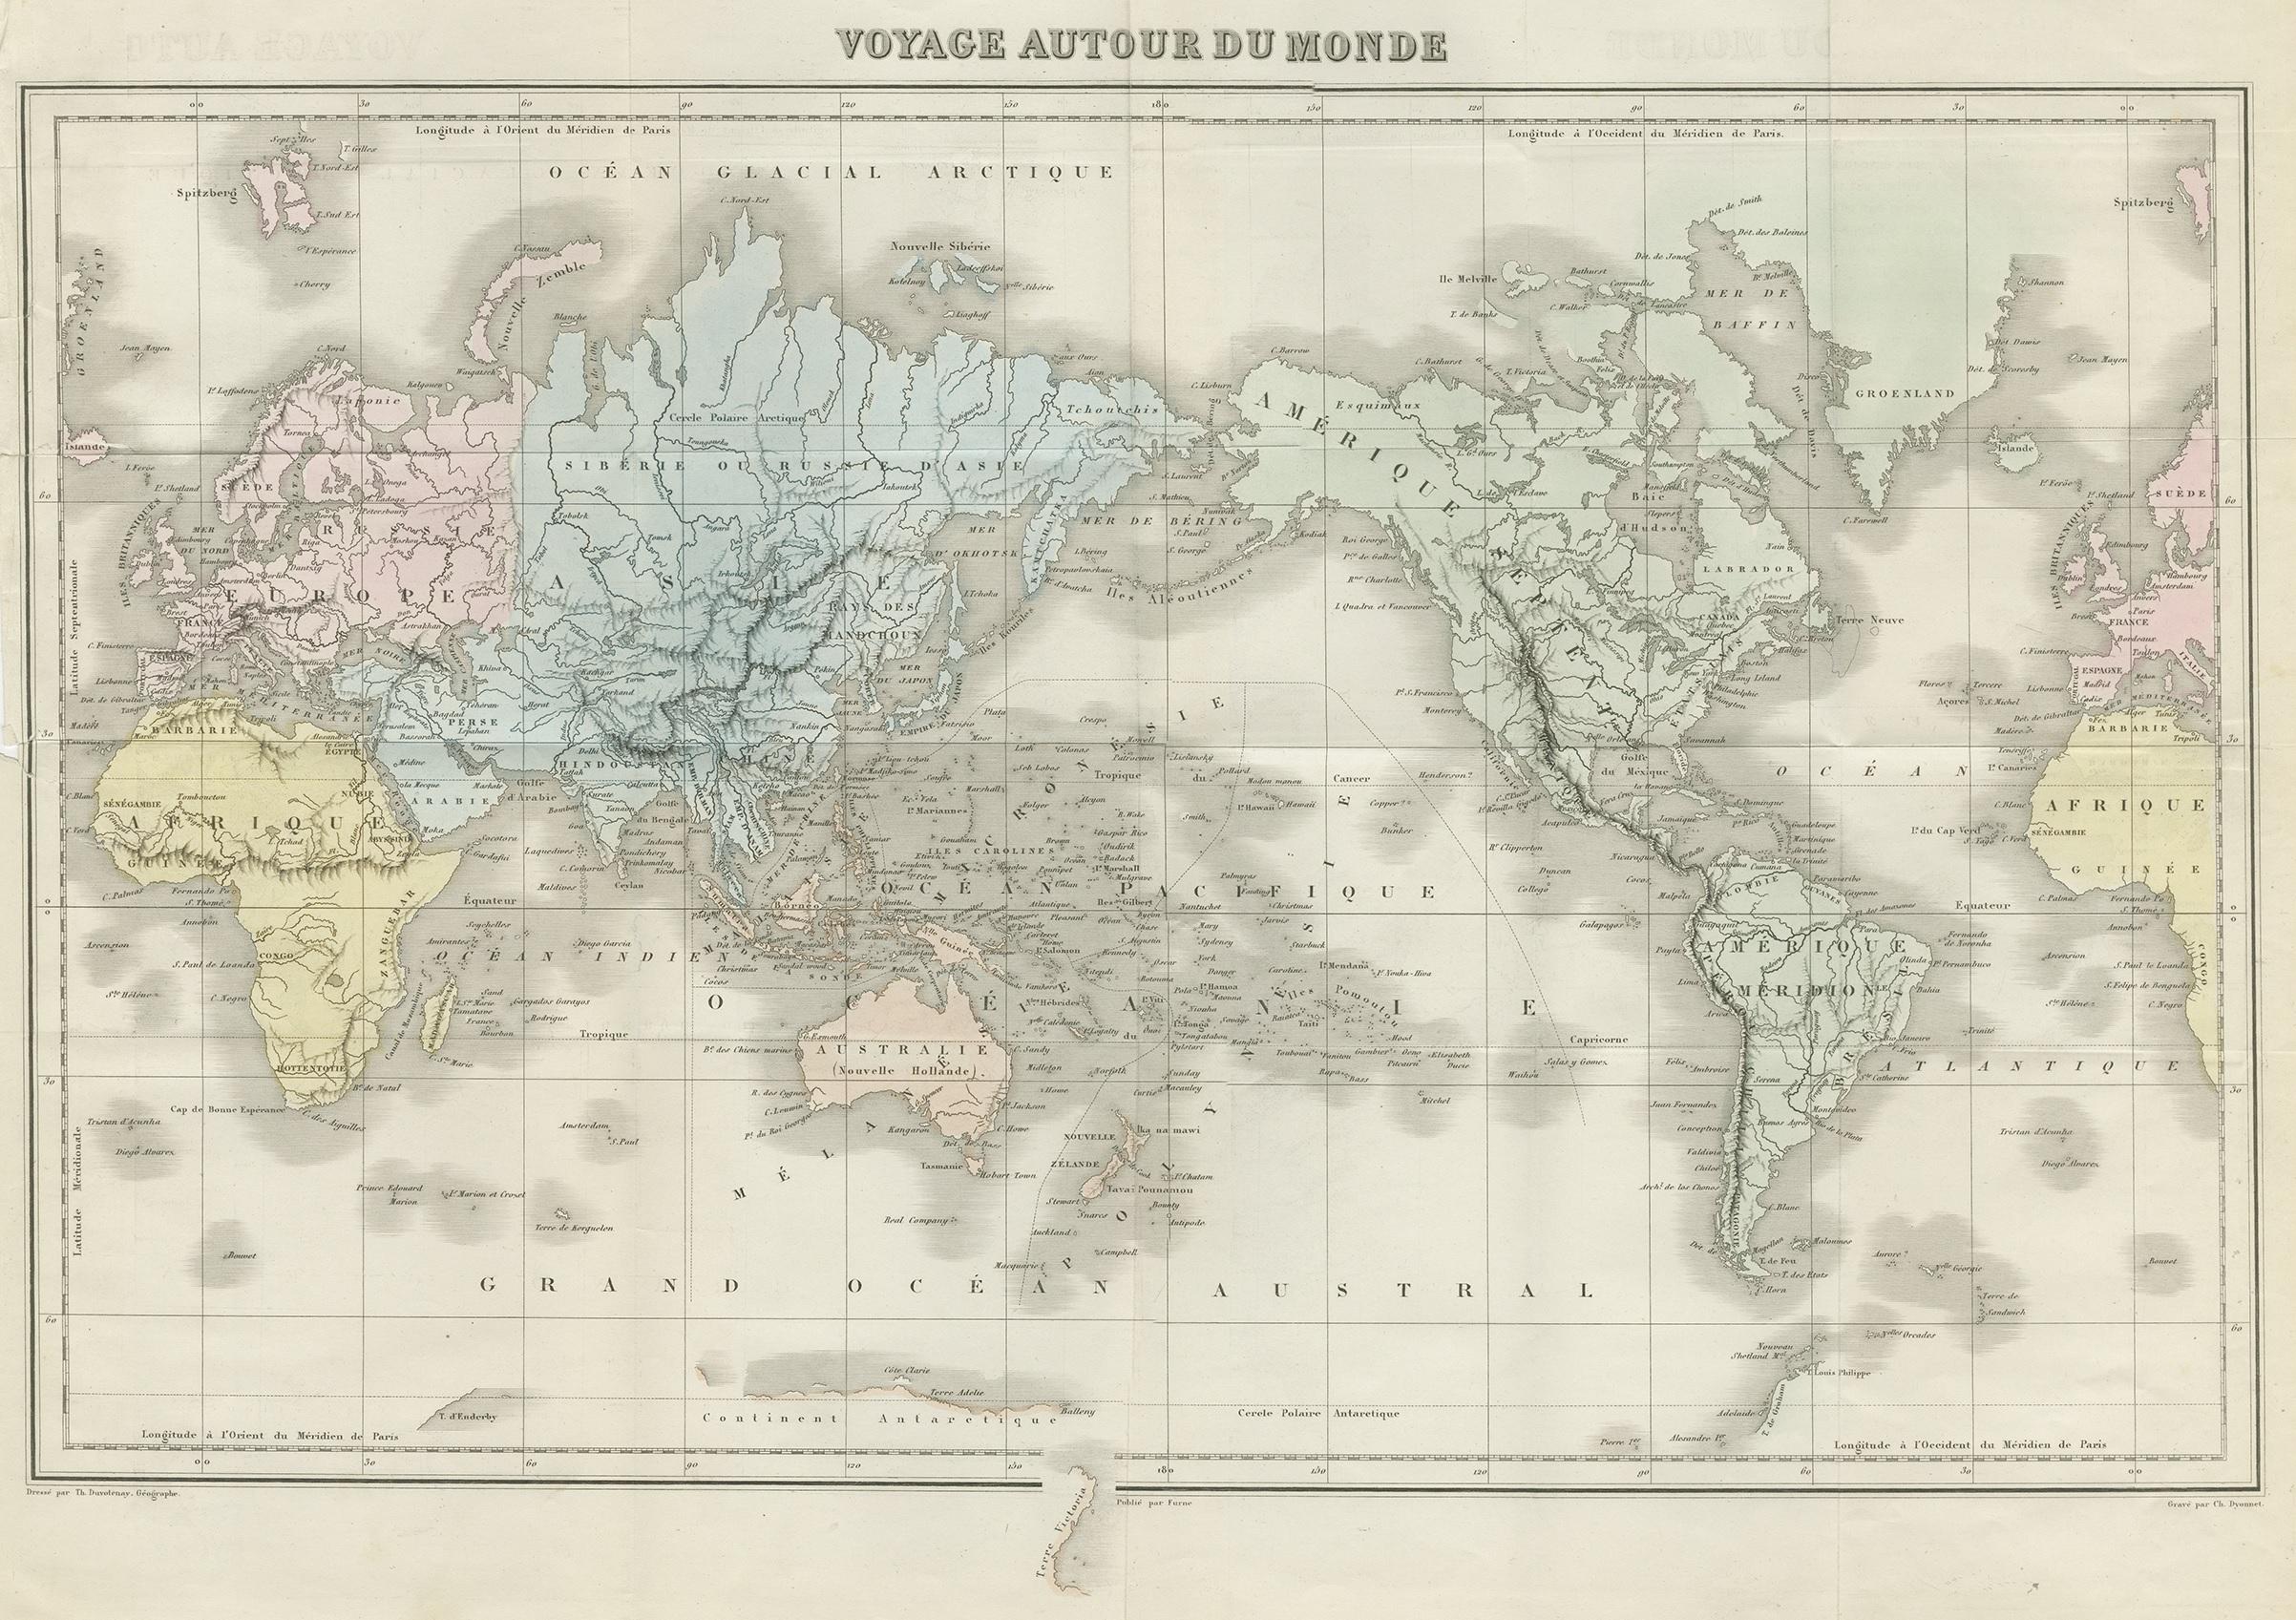 Antique map titled 'Voyage Autour du Monde'. Original map of the world. This map originates from volume 1 of 'Voyage Autour du Monde' by Comte-Amiral Dumont D'Urville.